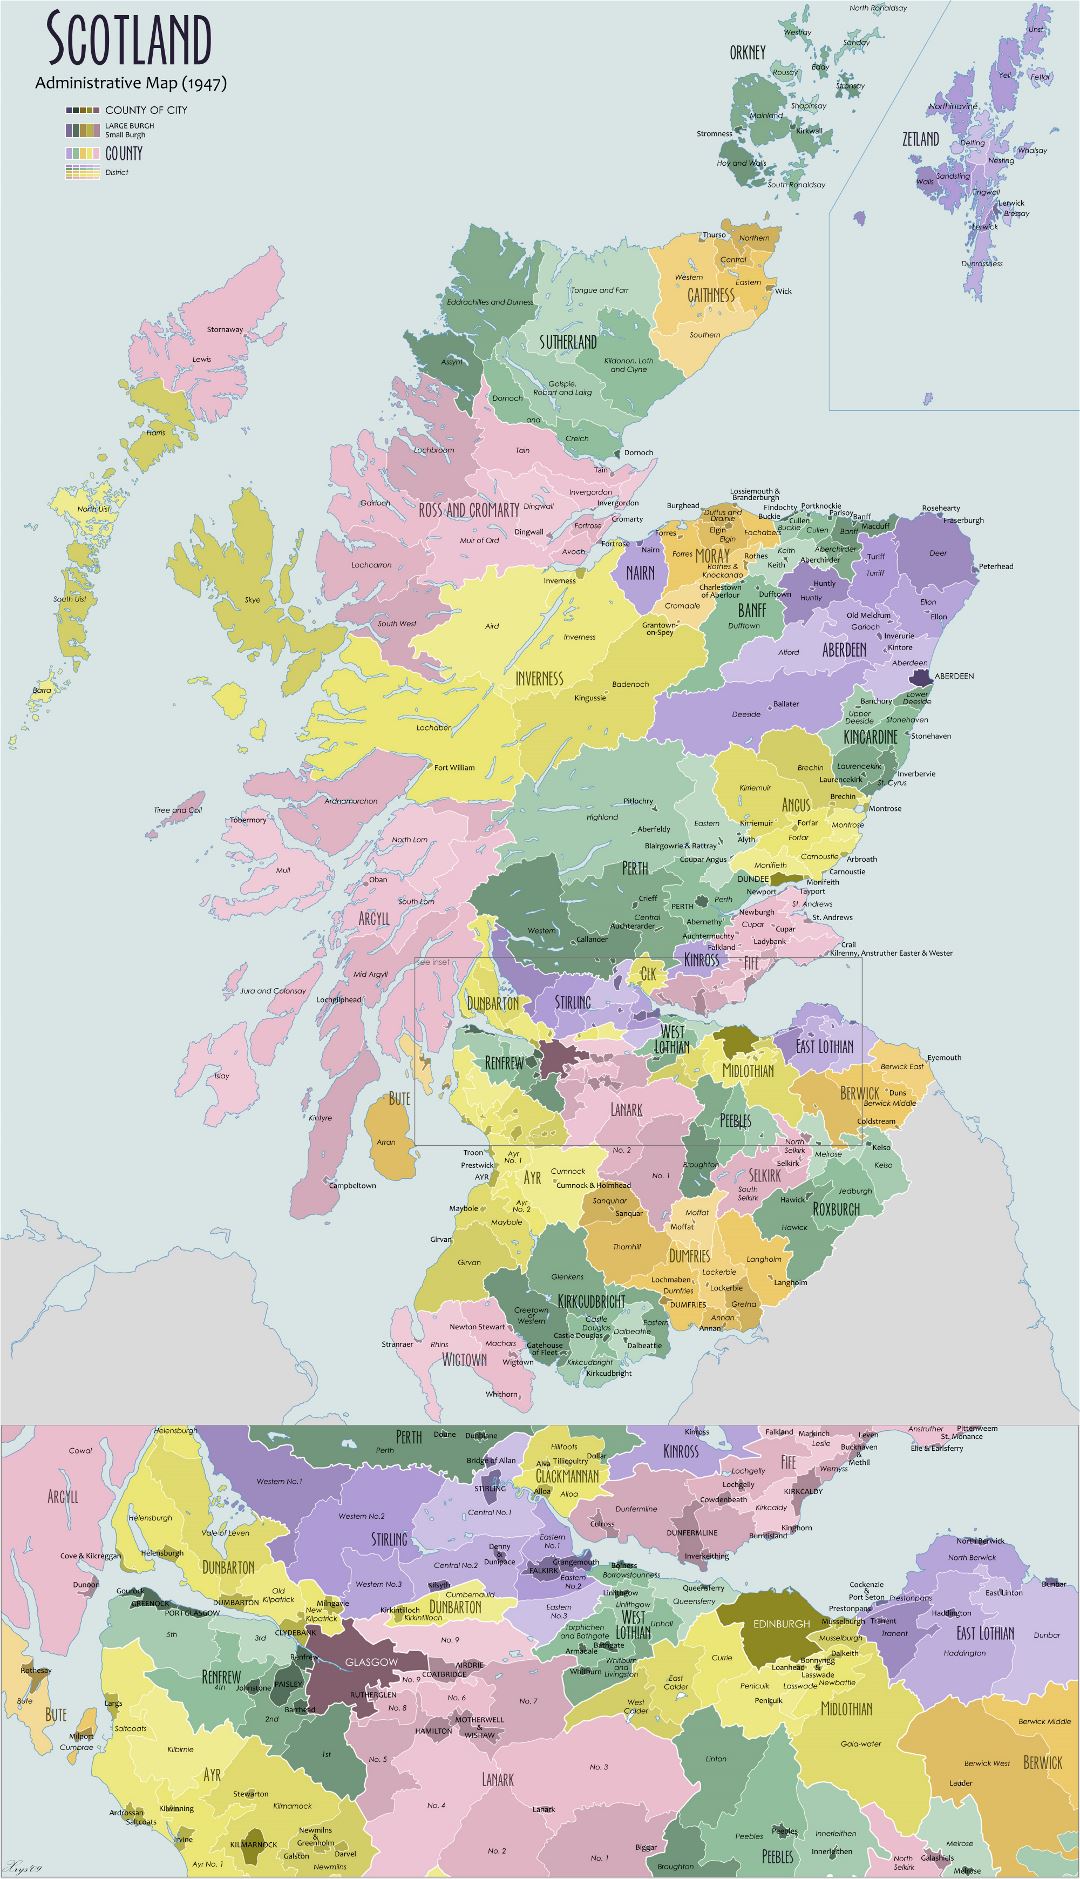 Grande detallado mapa administrativo de Escocia - 1947